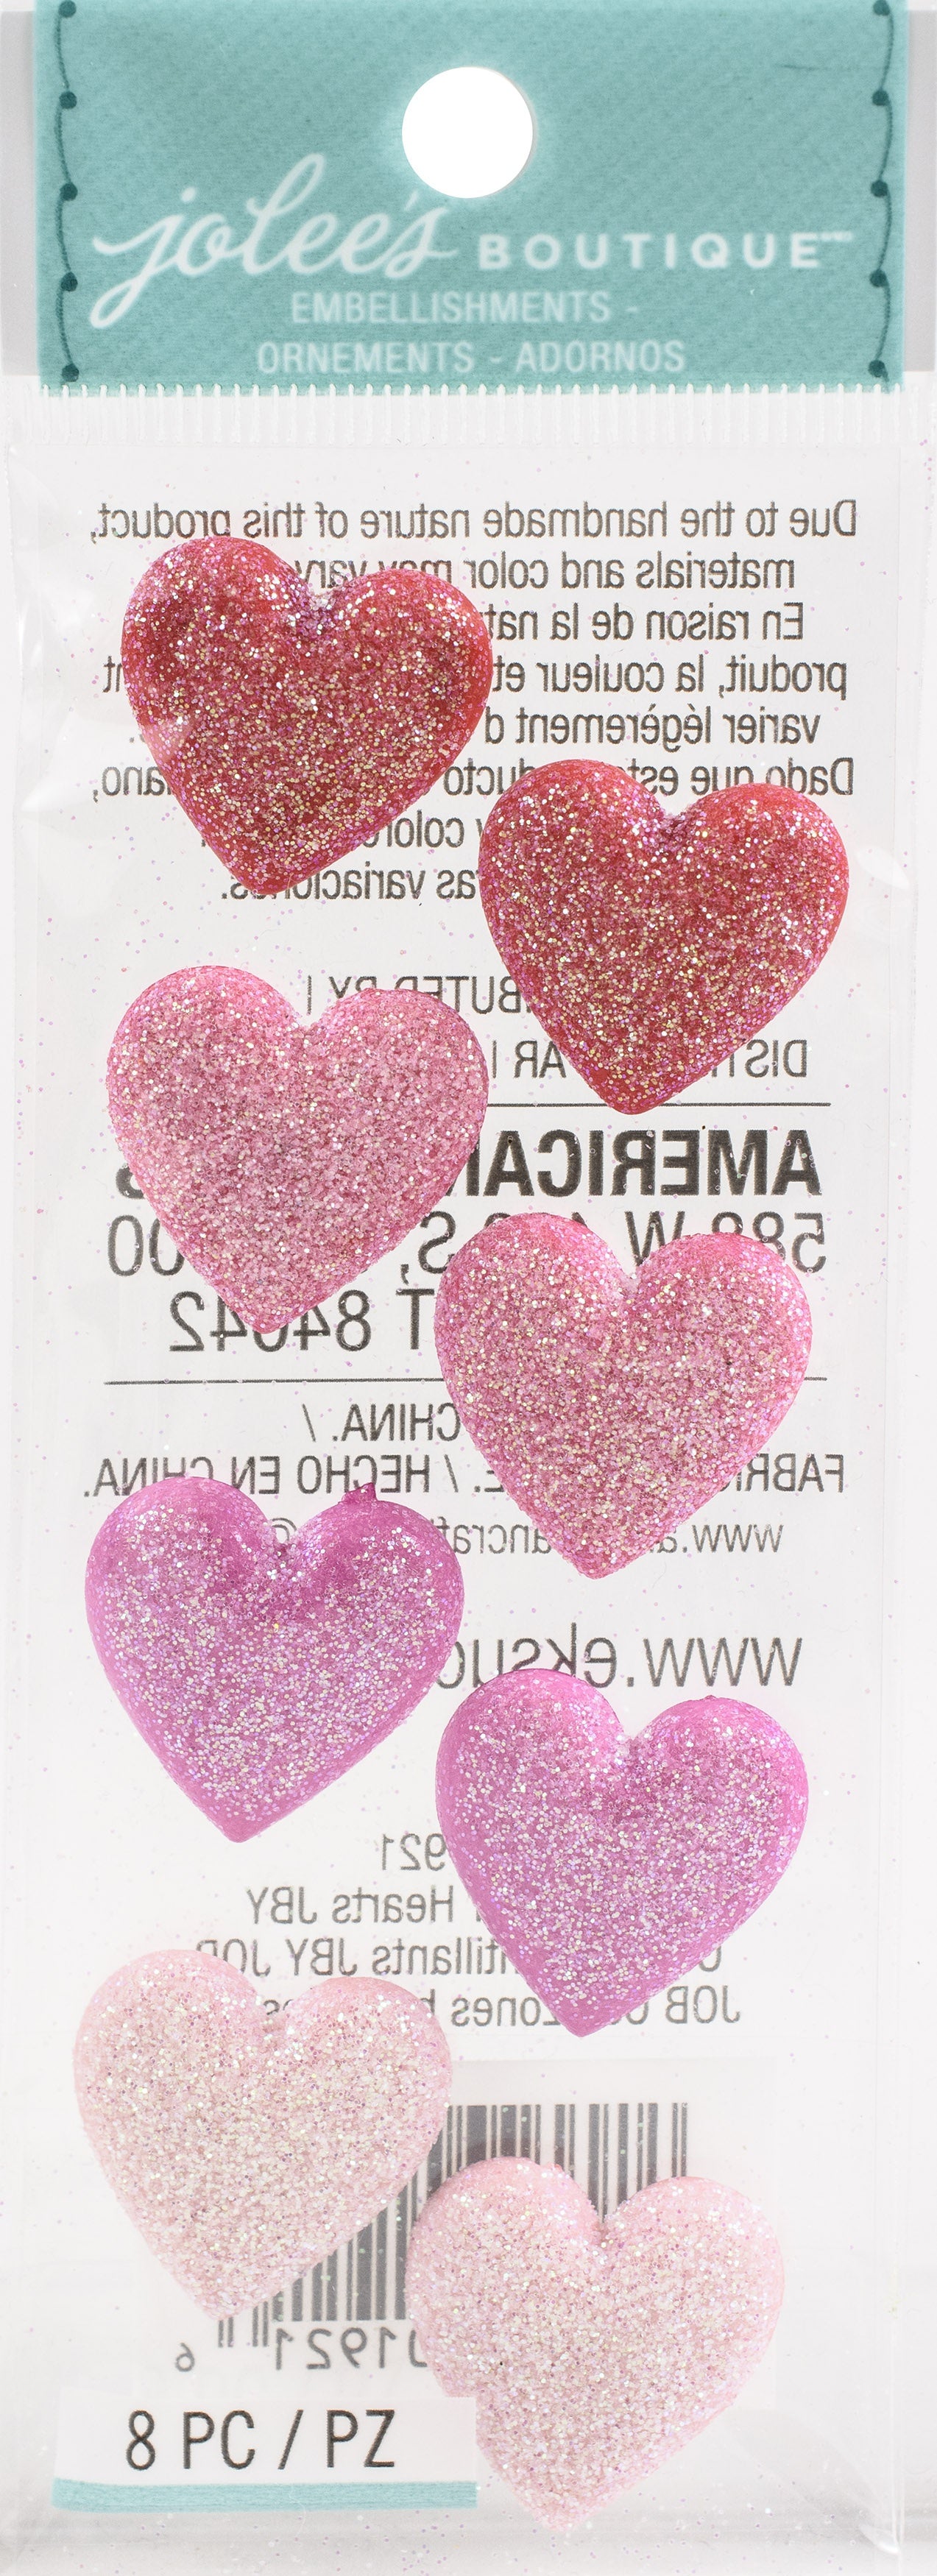 Jolee's Boutique Dimensional Repeat Stickers-Glitter Hearts